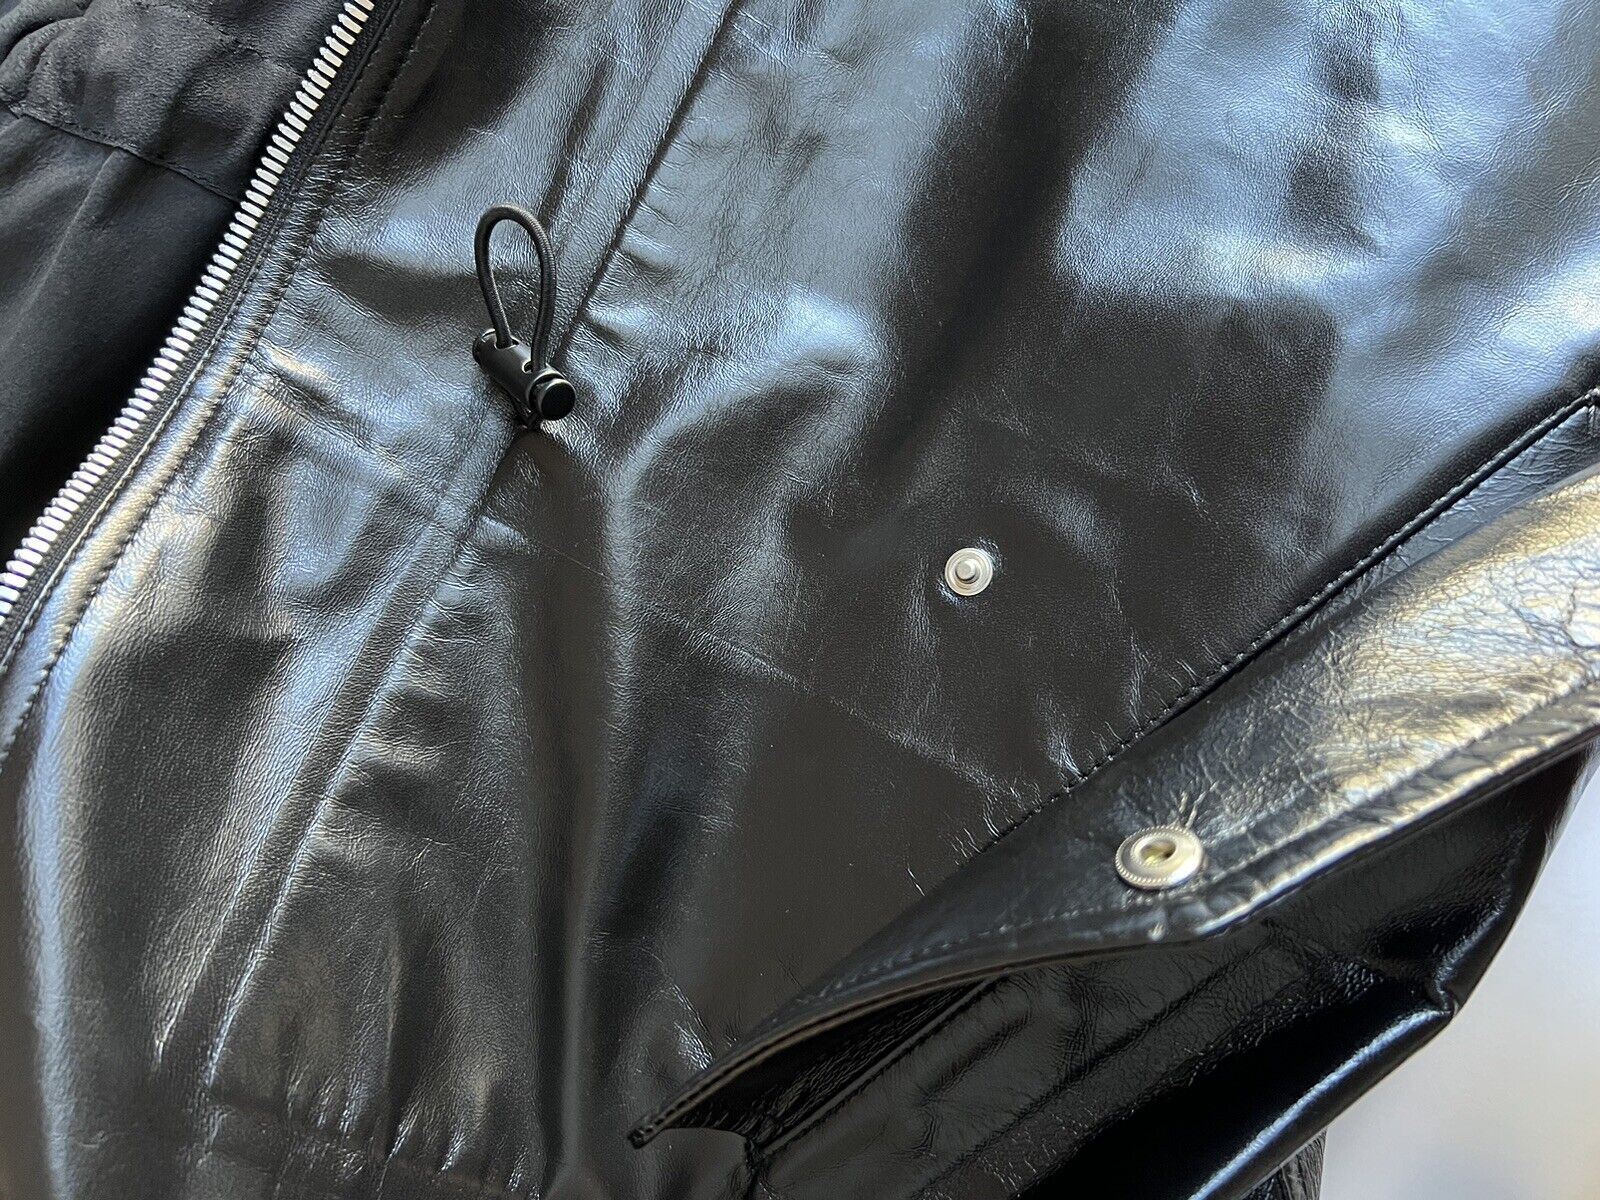 NWT $7500 Bottega Veneta Women's Coat in Shiny Leather Black 633444 Small